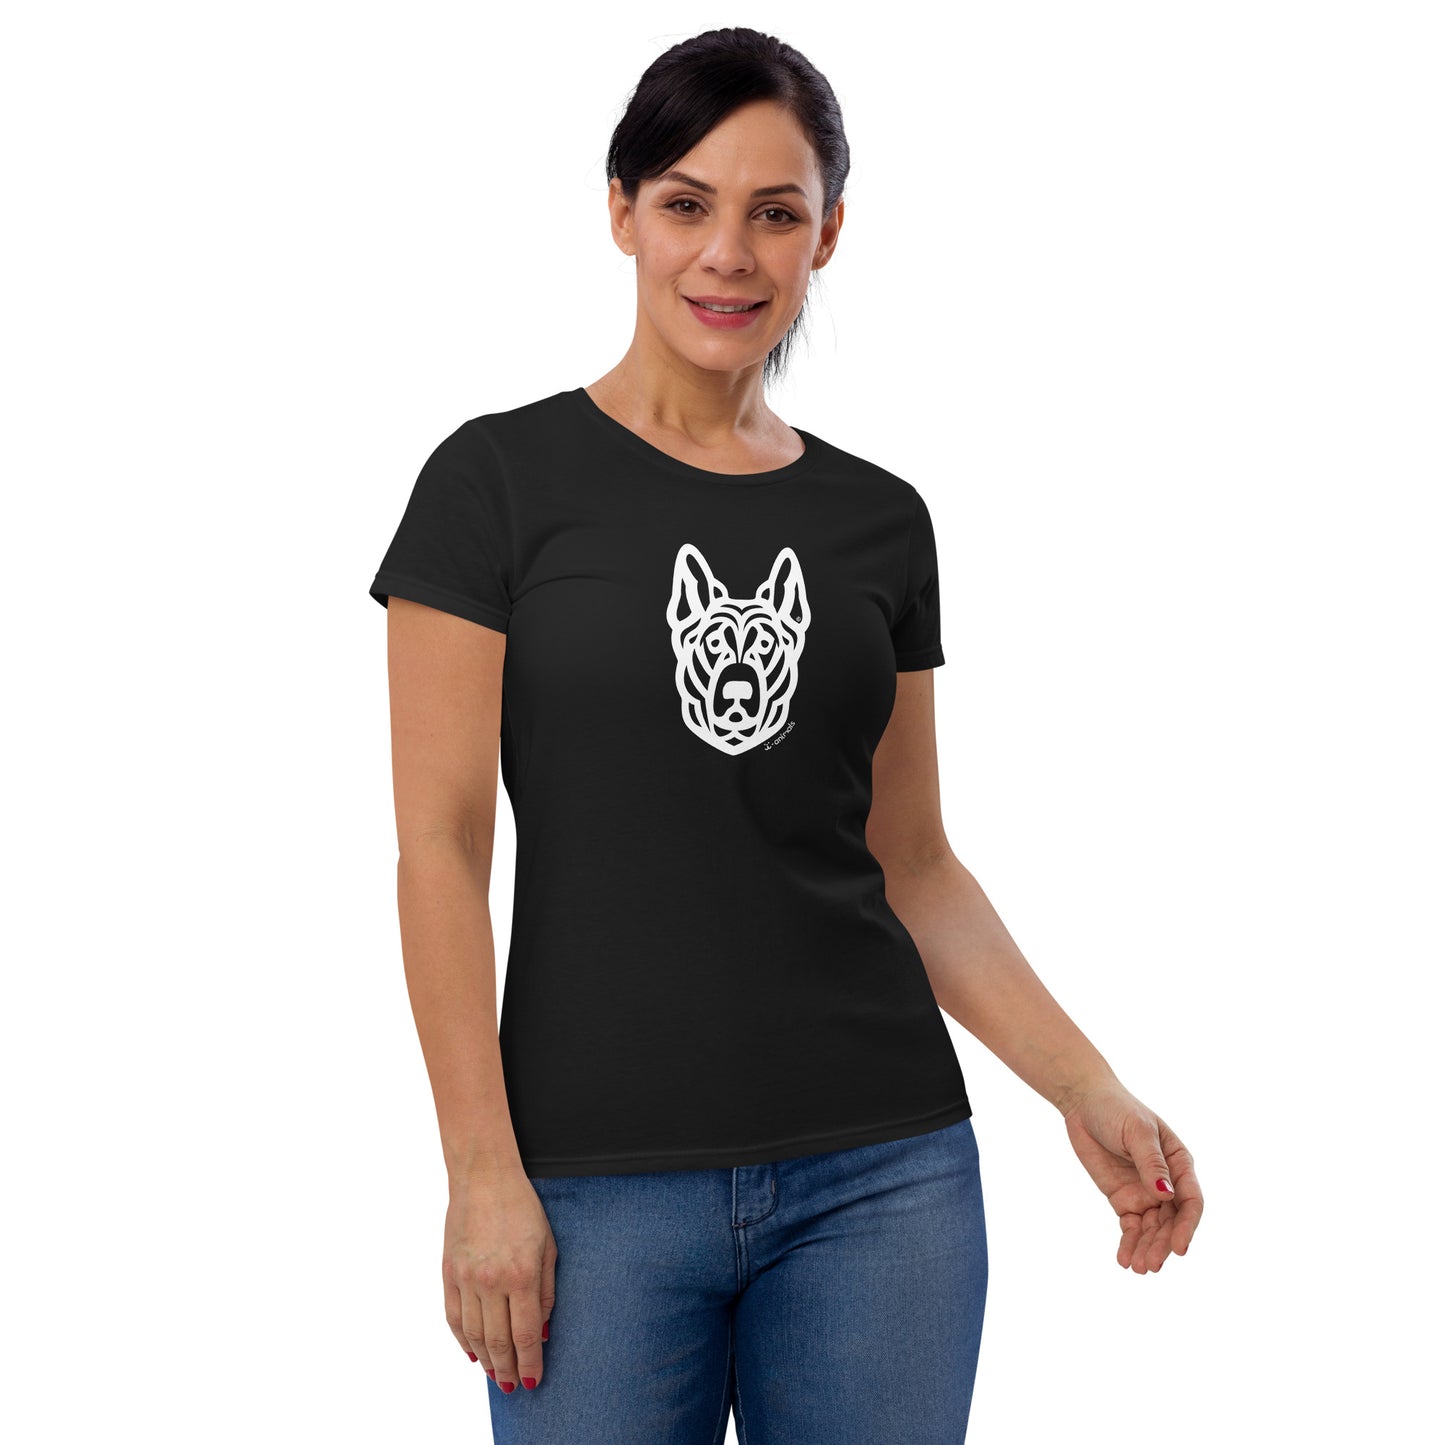 Women's Fashion Fit T-Shirt - German Shepherd - Tribal